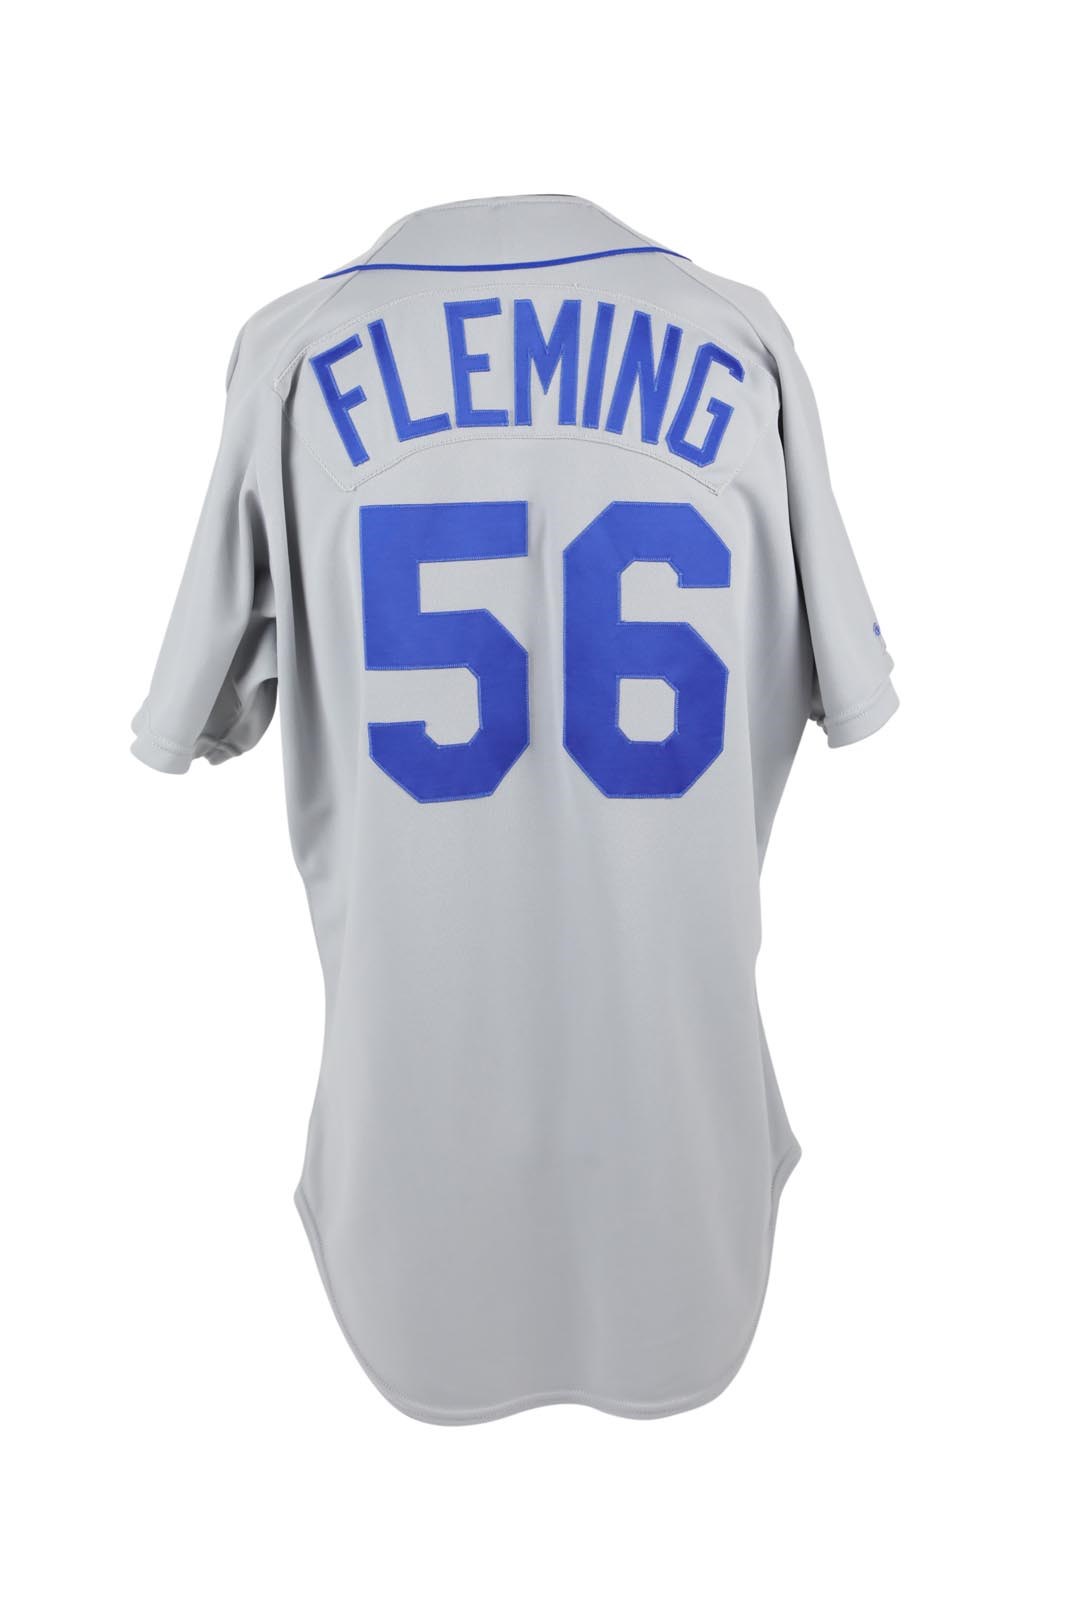 - 1991 Dave Fleming Seattle Mariners Game Worn Rookie Jersey